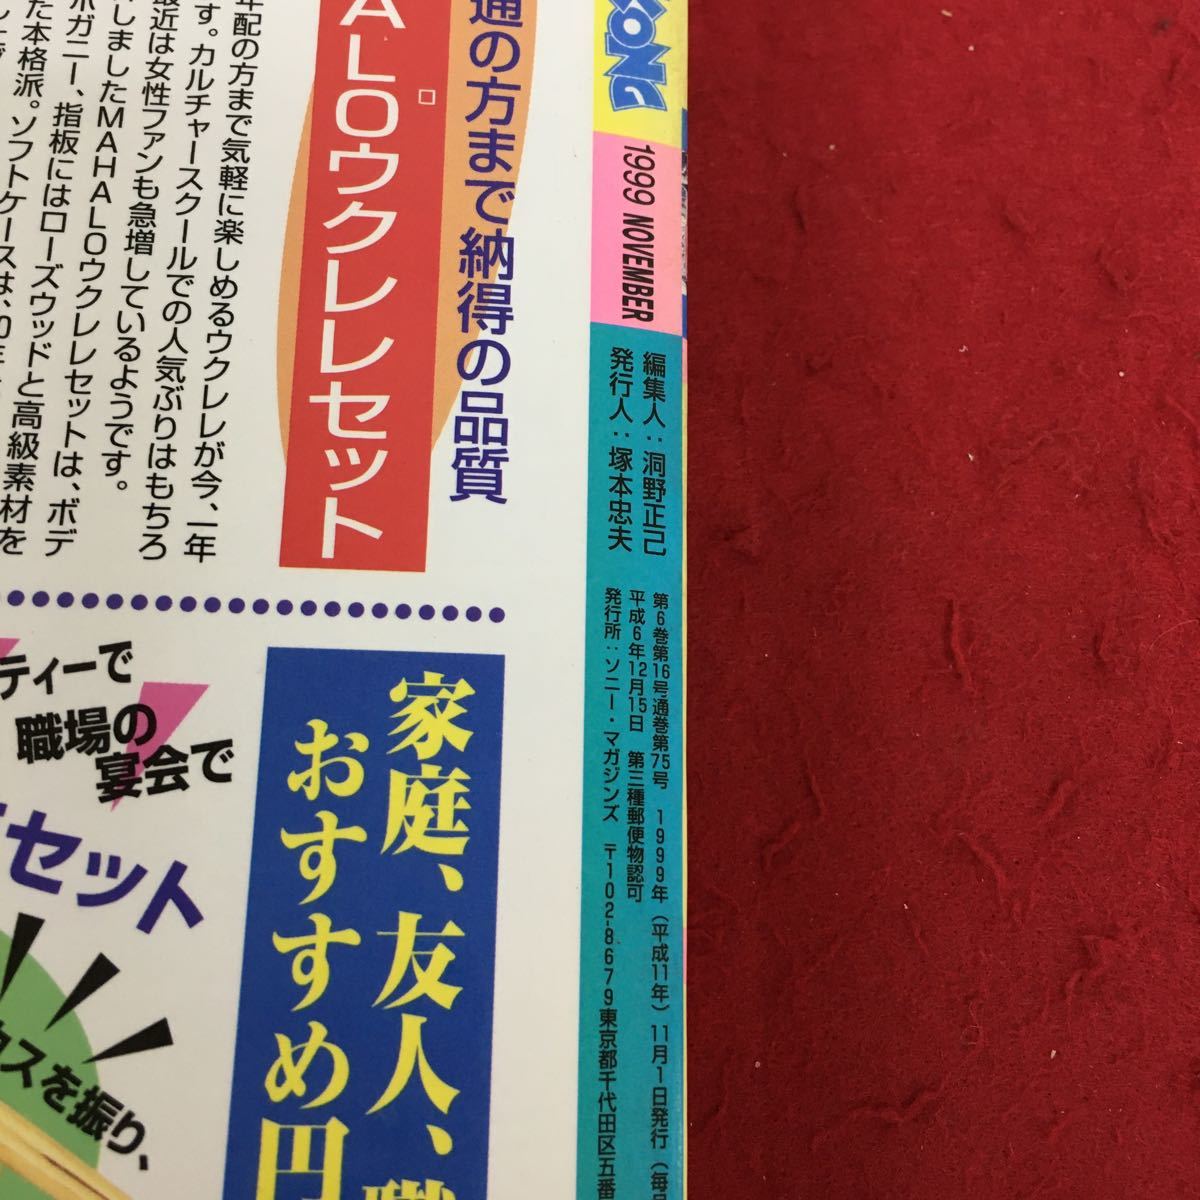 c-537 Song Kong 11 Morning Musume... включая постер Suzuki Ami солнце . Cisco moon 1999 год 11 месяц 1 день выпуск *3